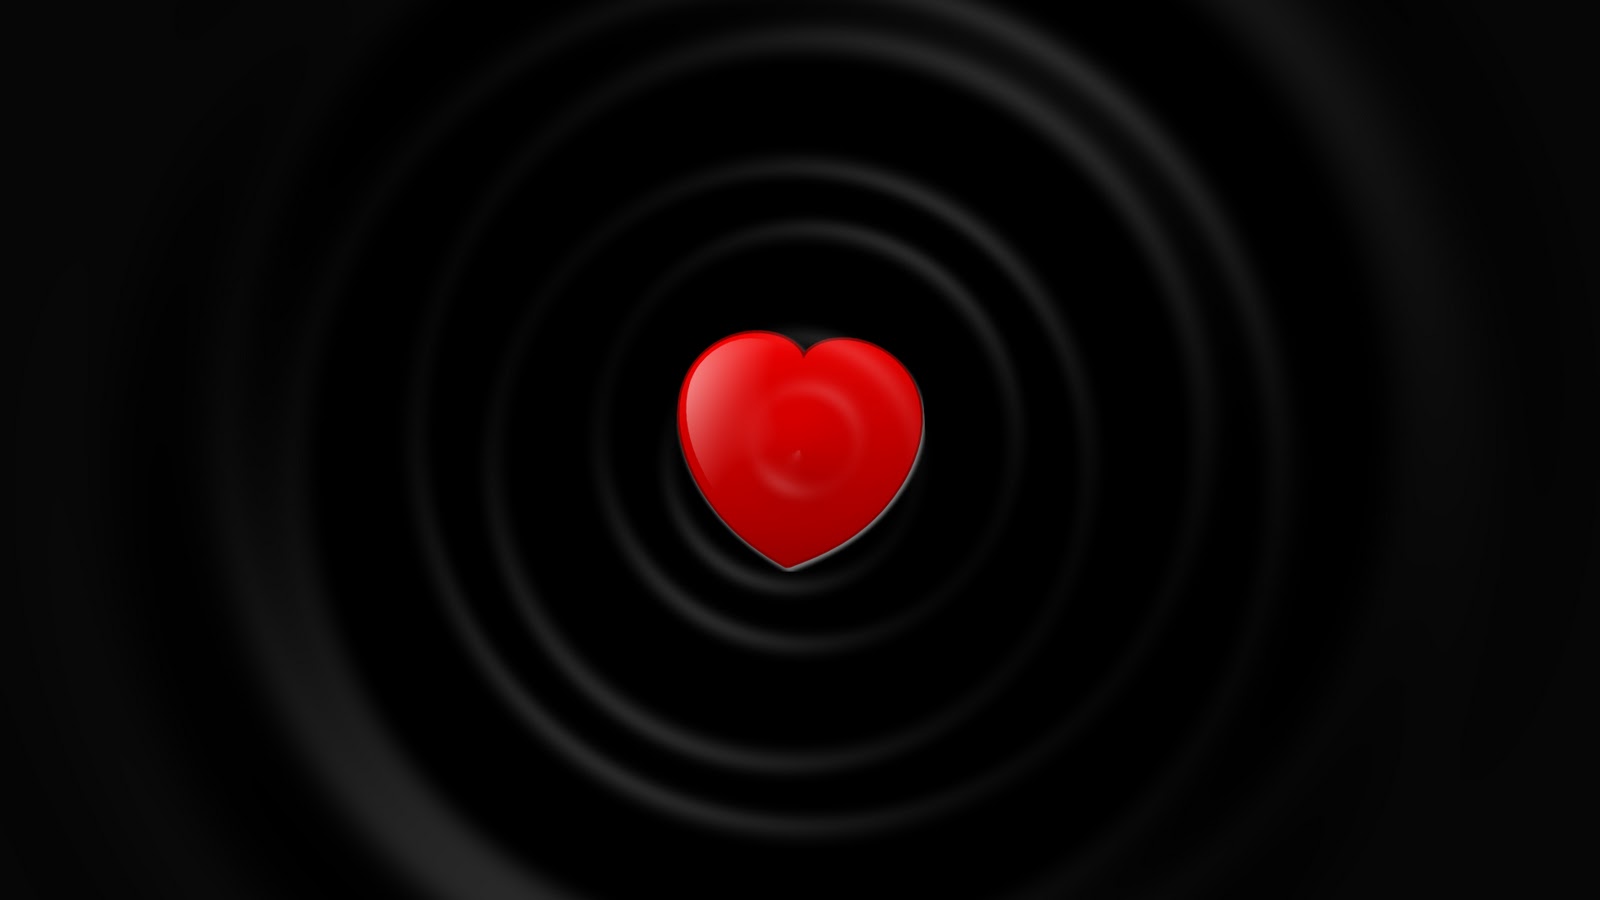 http://3.bp.blogspot.com/-5YoXr8JbjAY/TttSvcWbIRI/AAAAAAAABLE/U-sANiZT3io/s1600/hd-love-wallpaper-love-heart-red.jpg